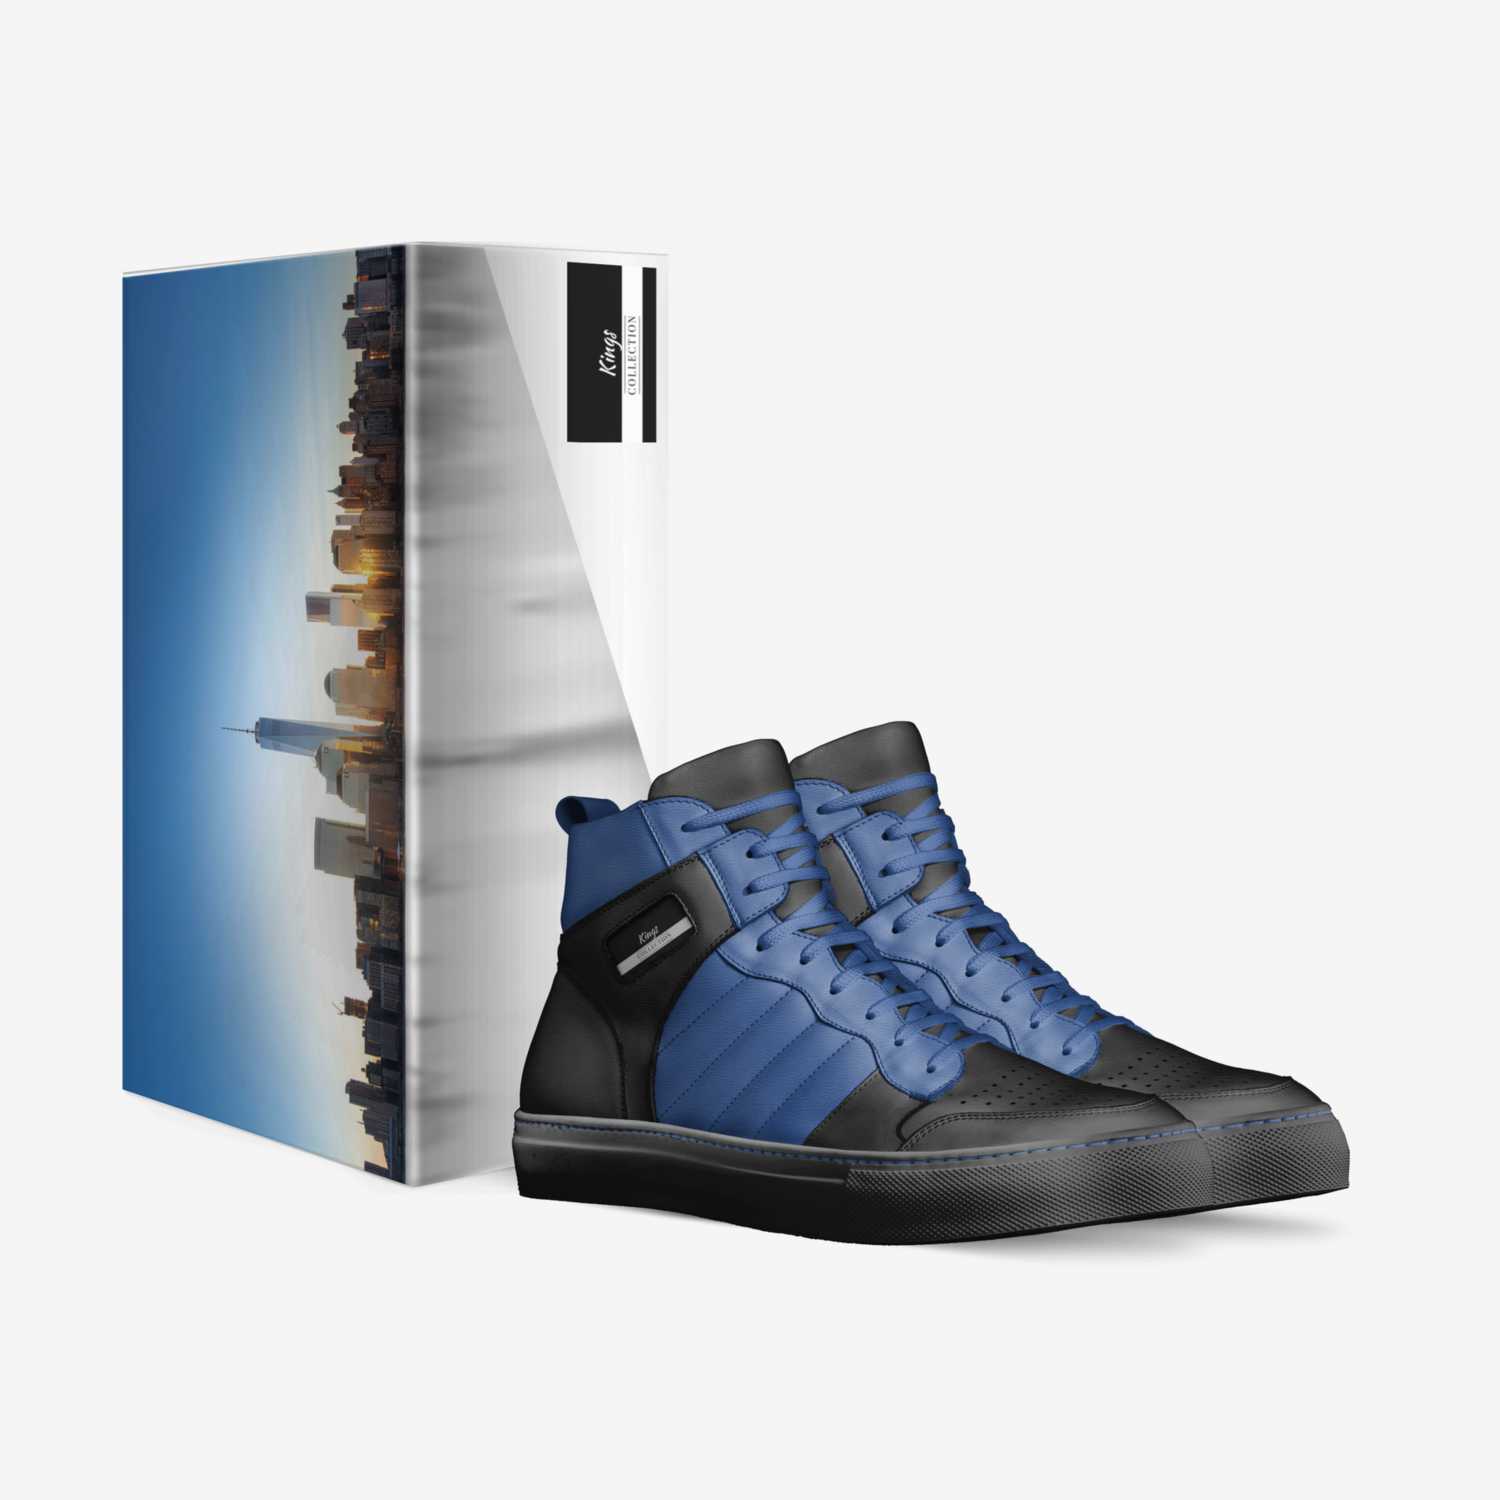 Kings custom made in Italy shoes by David Luke Daniels | Box view